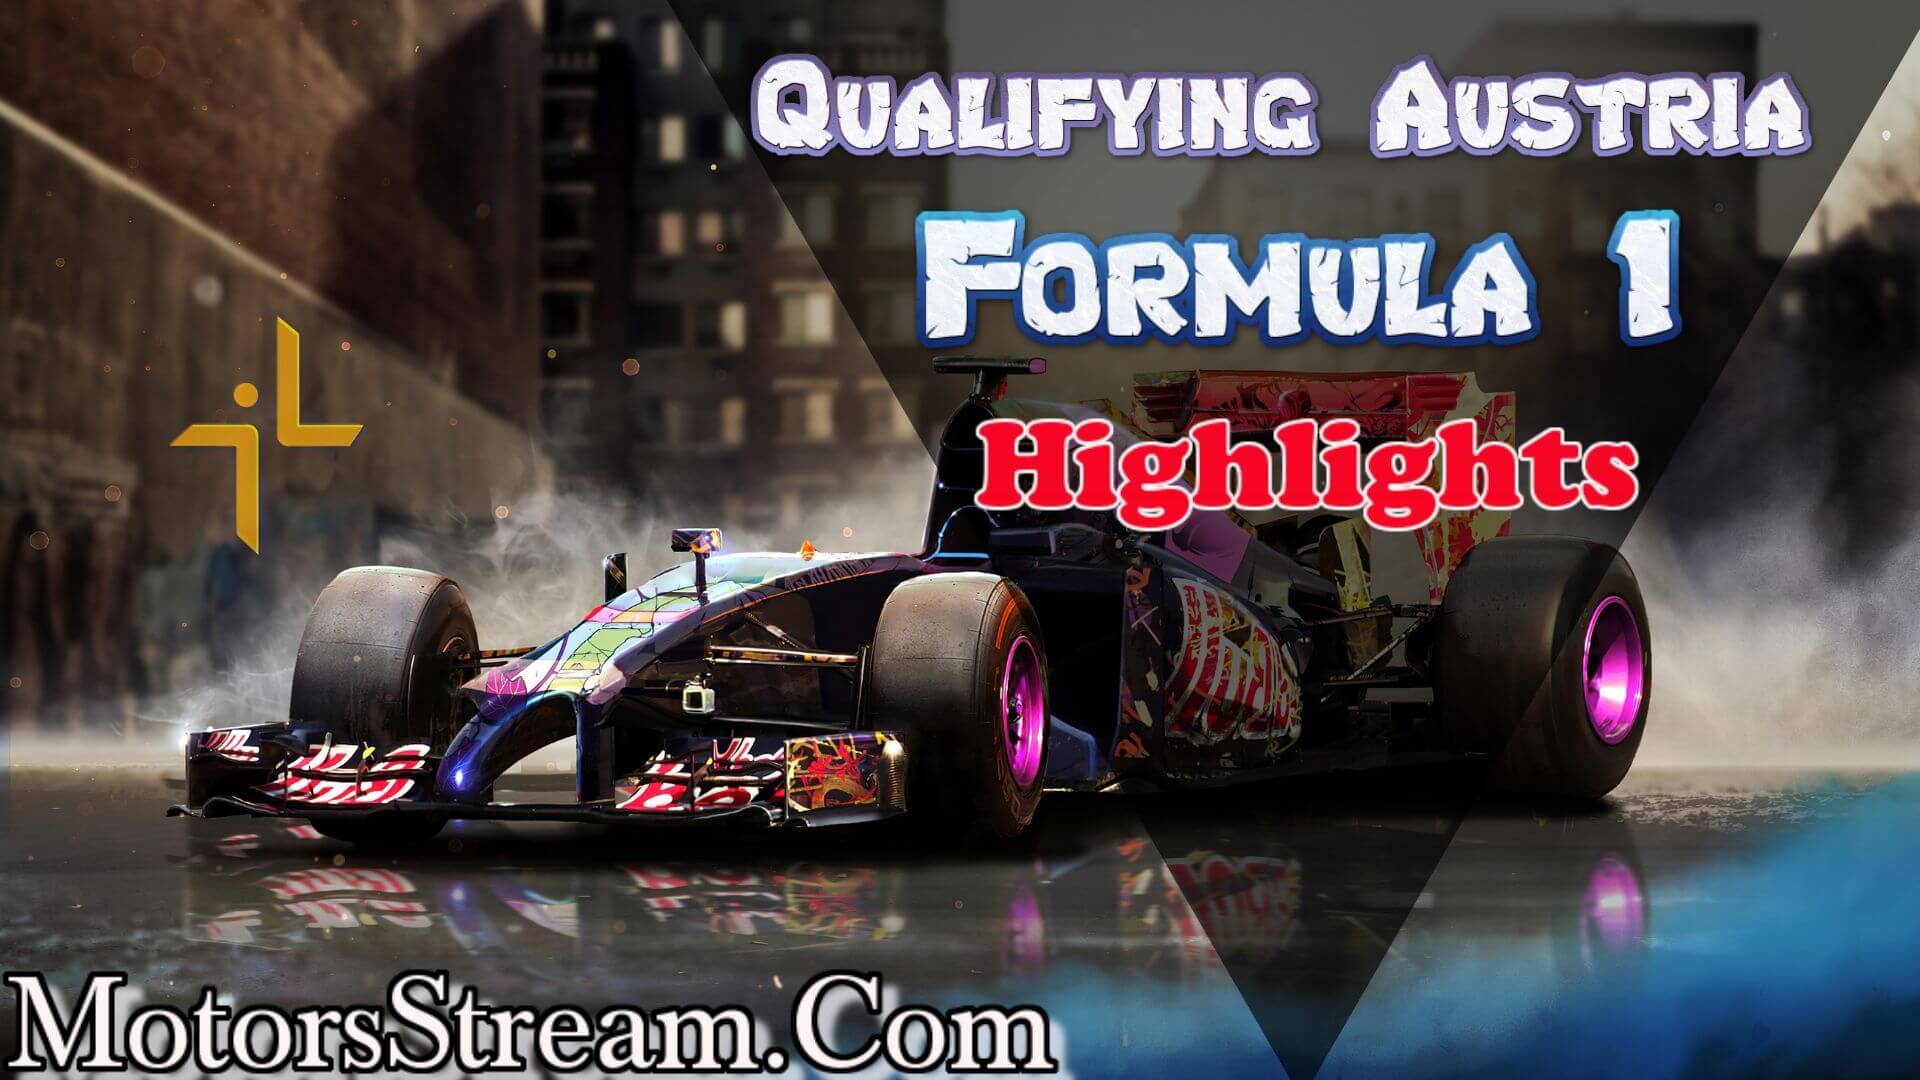 Qualifying Austria GP 2020 Formula 1 Highlights